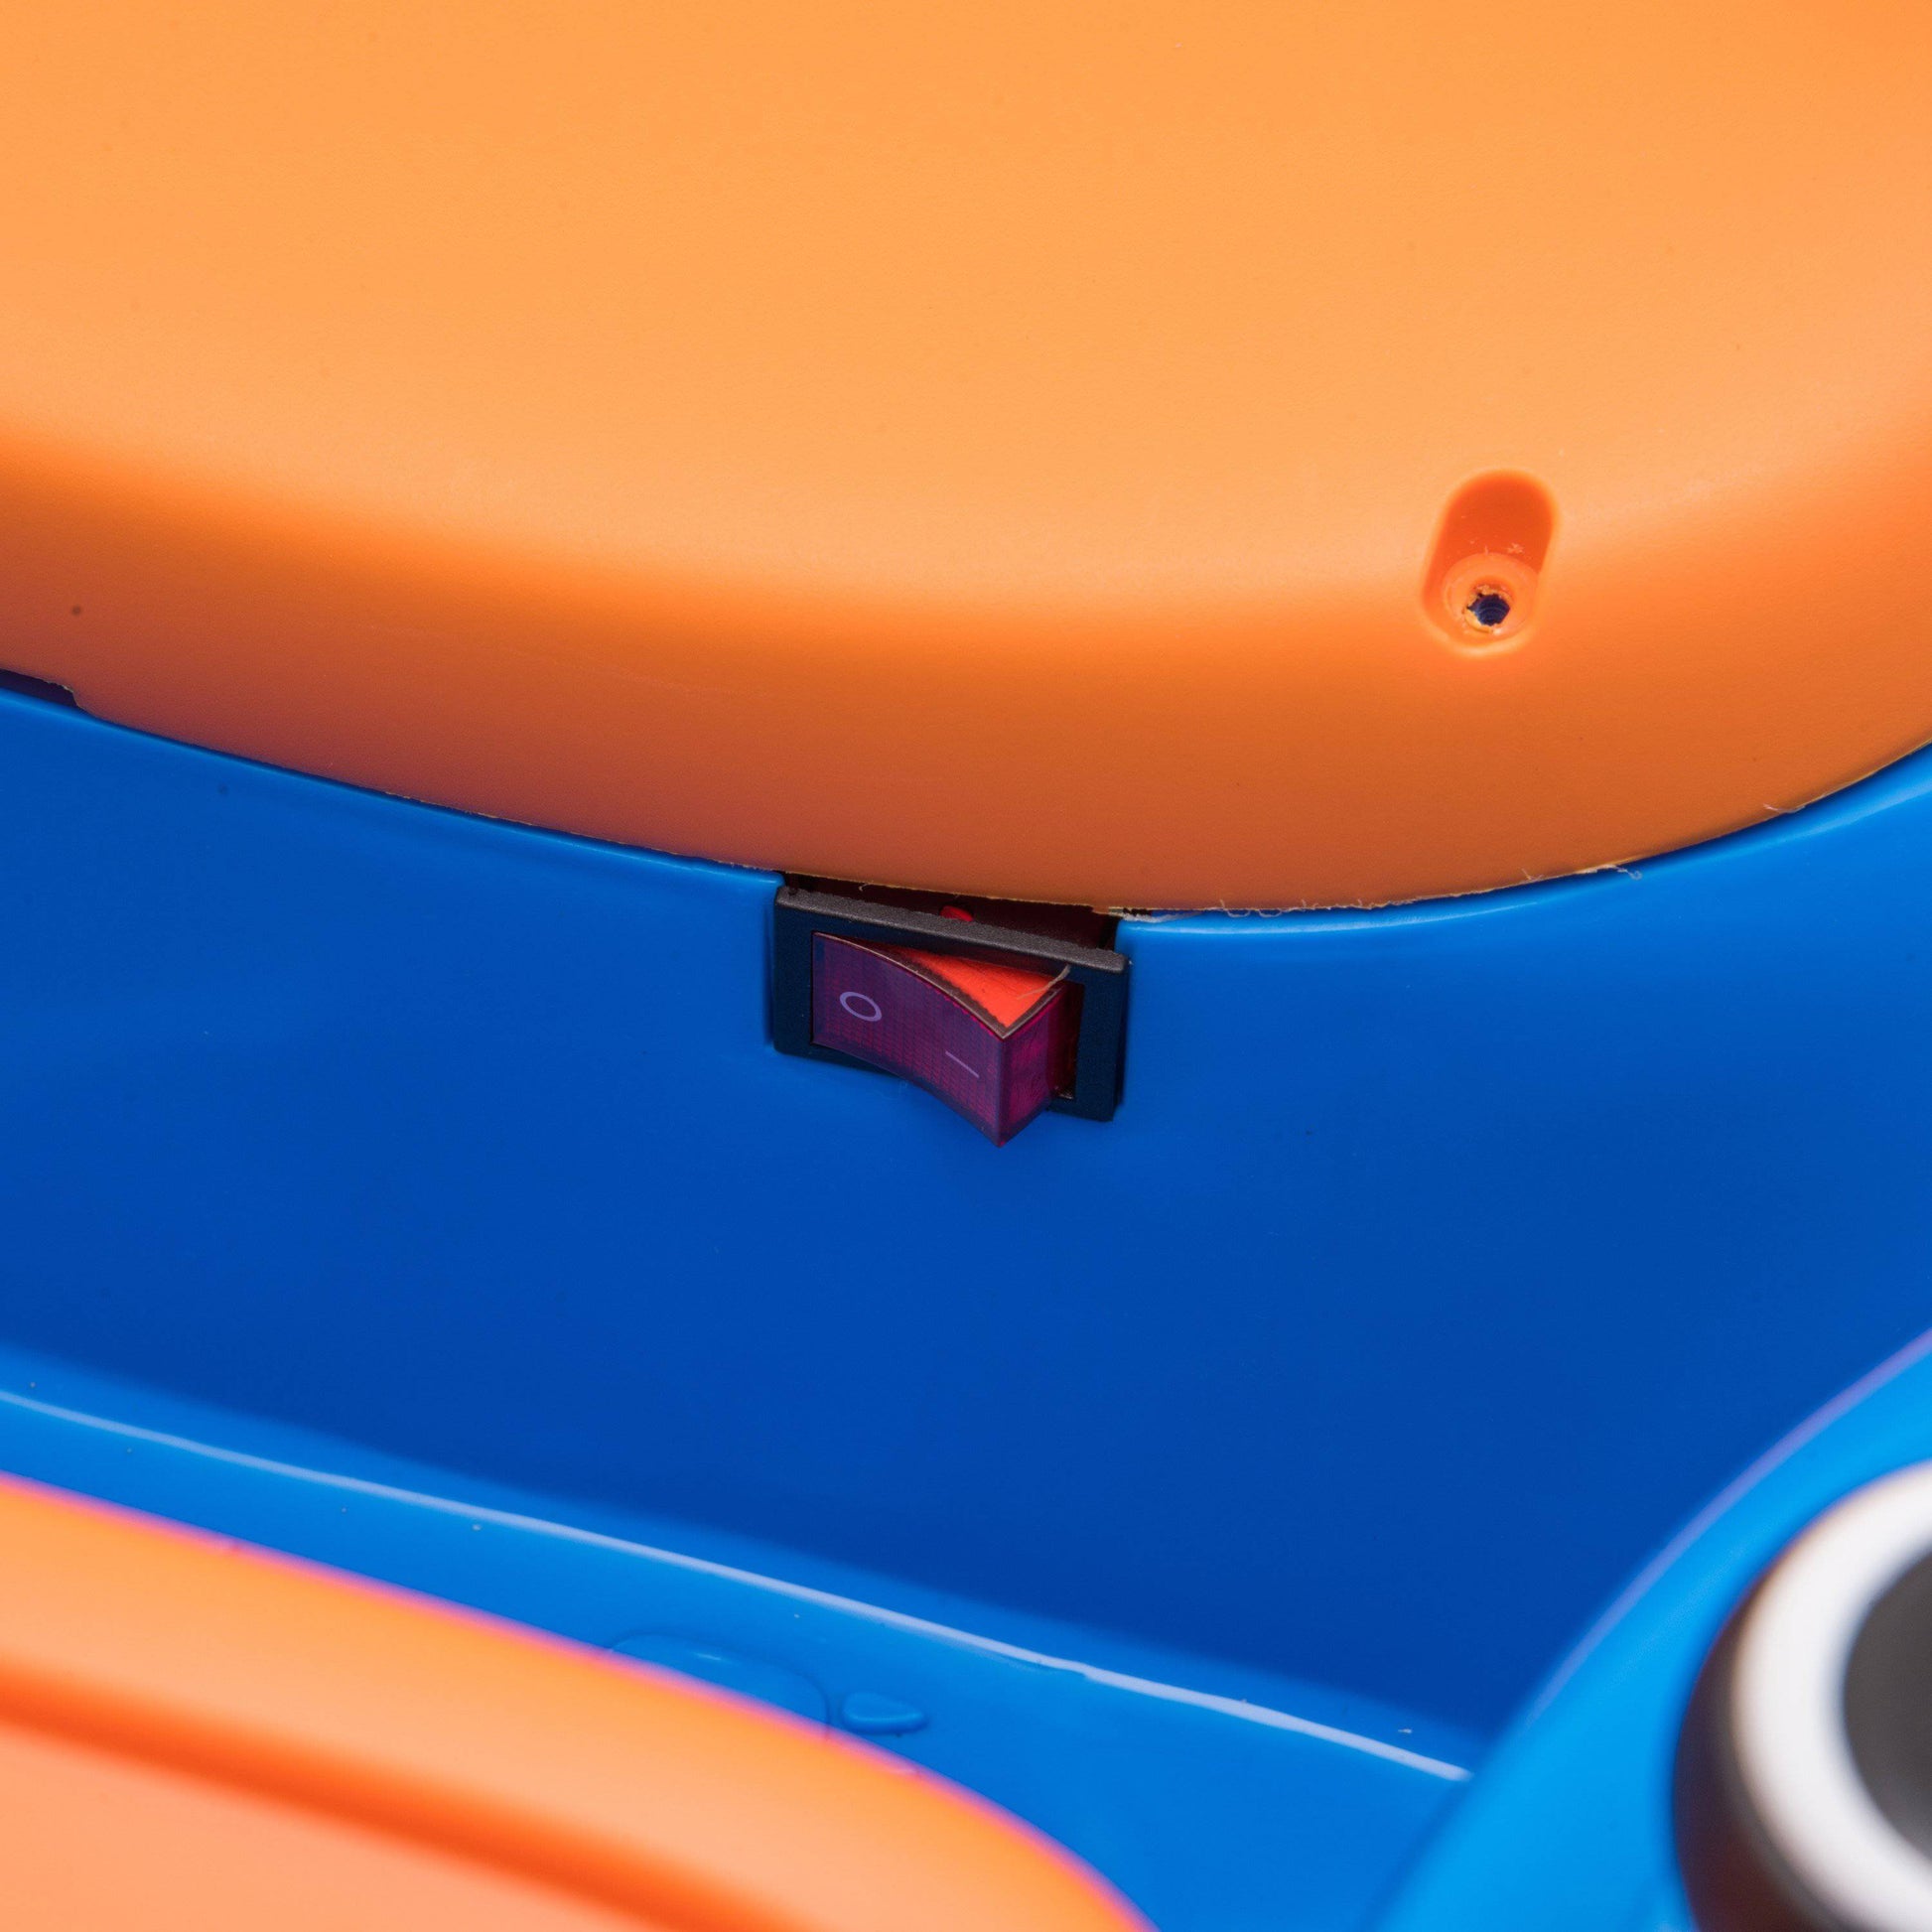 6V Freddo Toys Bumper Car with Remote Control for 3+ Years (Blue)